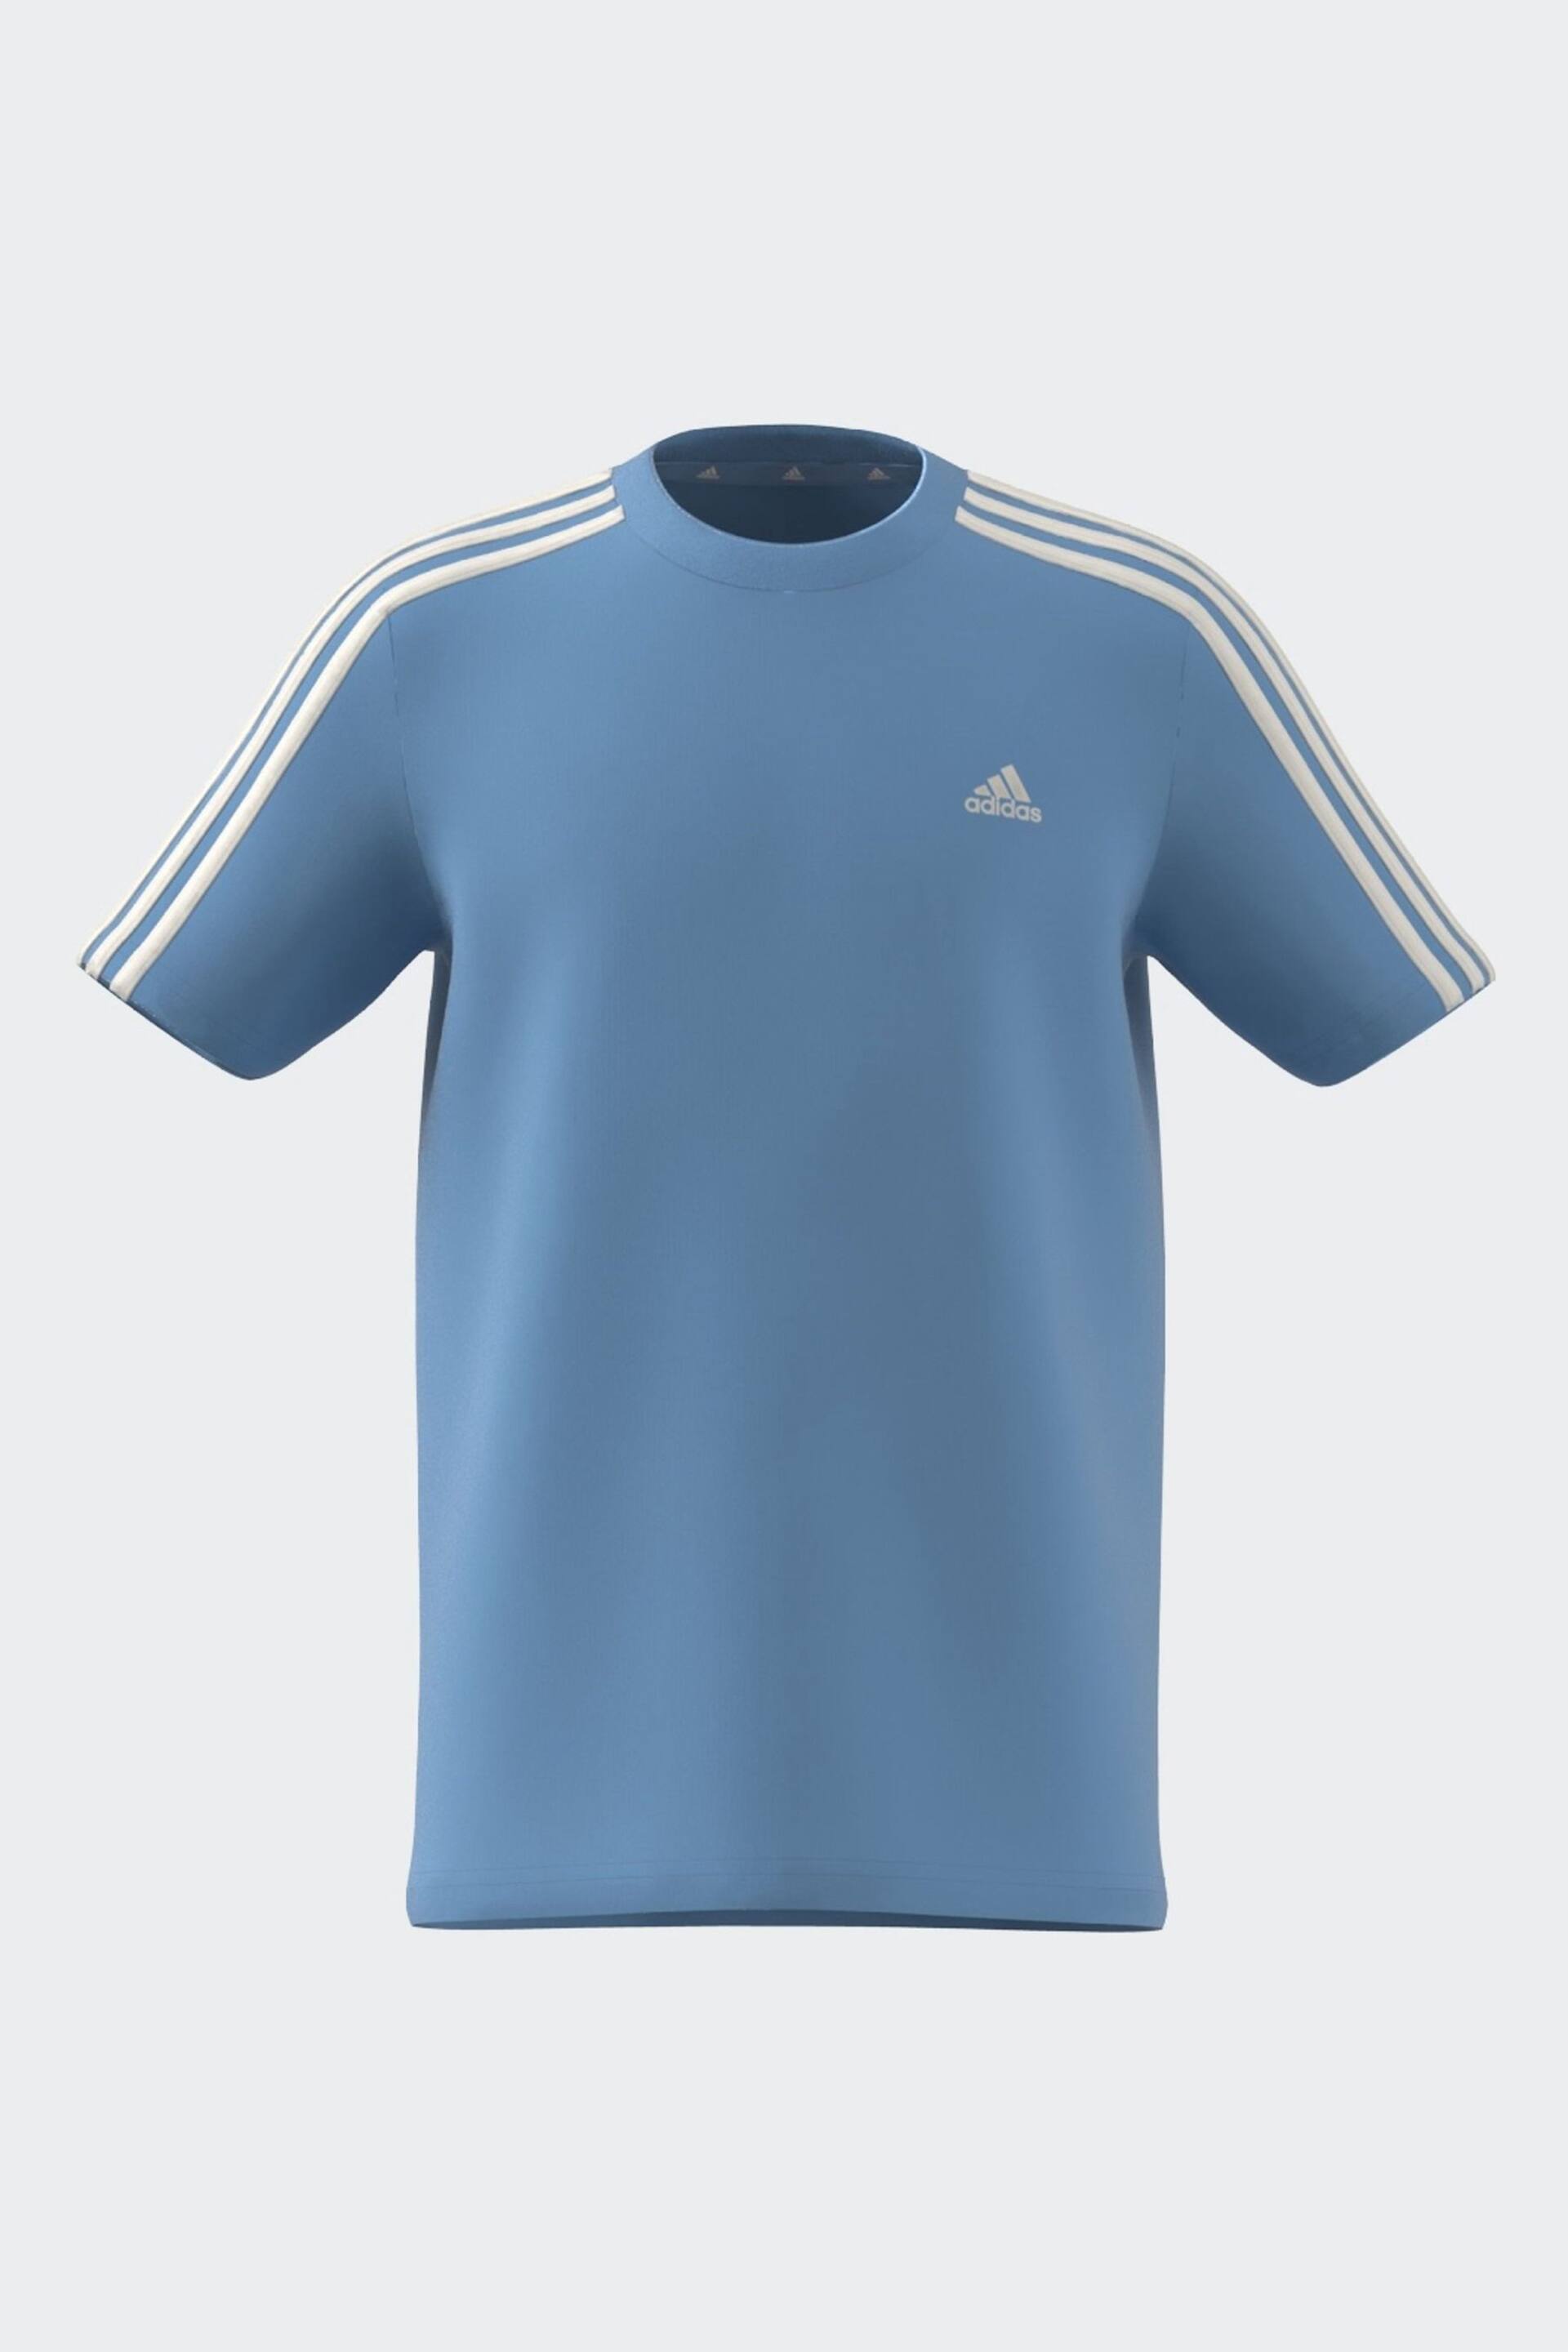 adidas Navy Blue Essentials 3-Stripes Cotton T-Shirt - Image 9 of 16